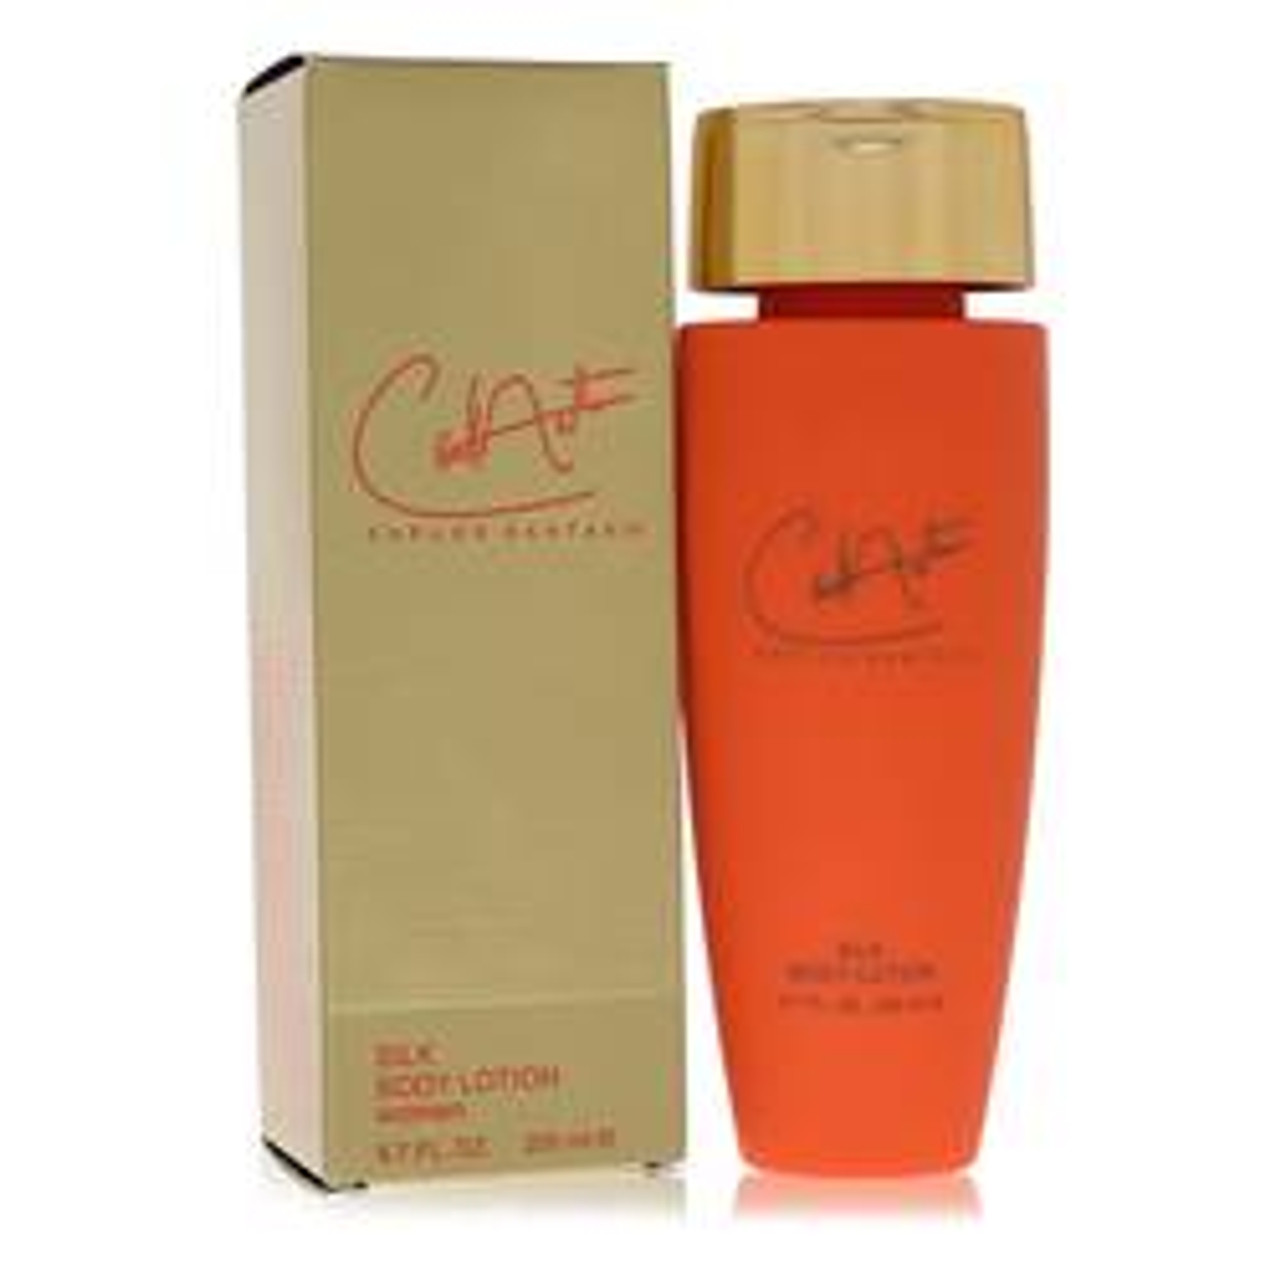 Carlos Santana Perfume By Carlos Santana Body Lotion 6.7 oz for Women - *Pre-Order